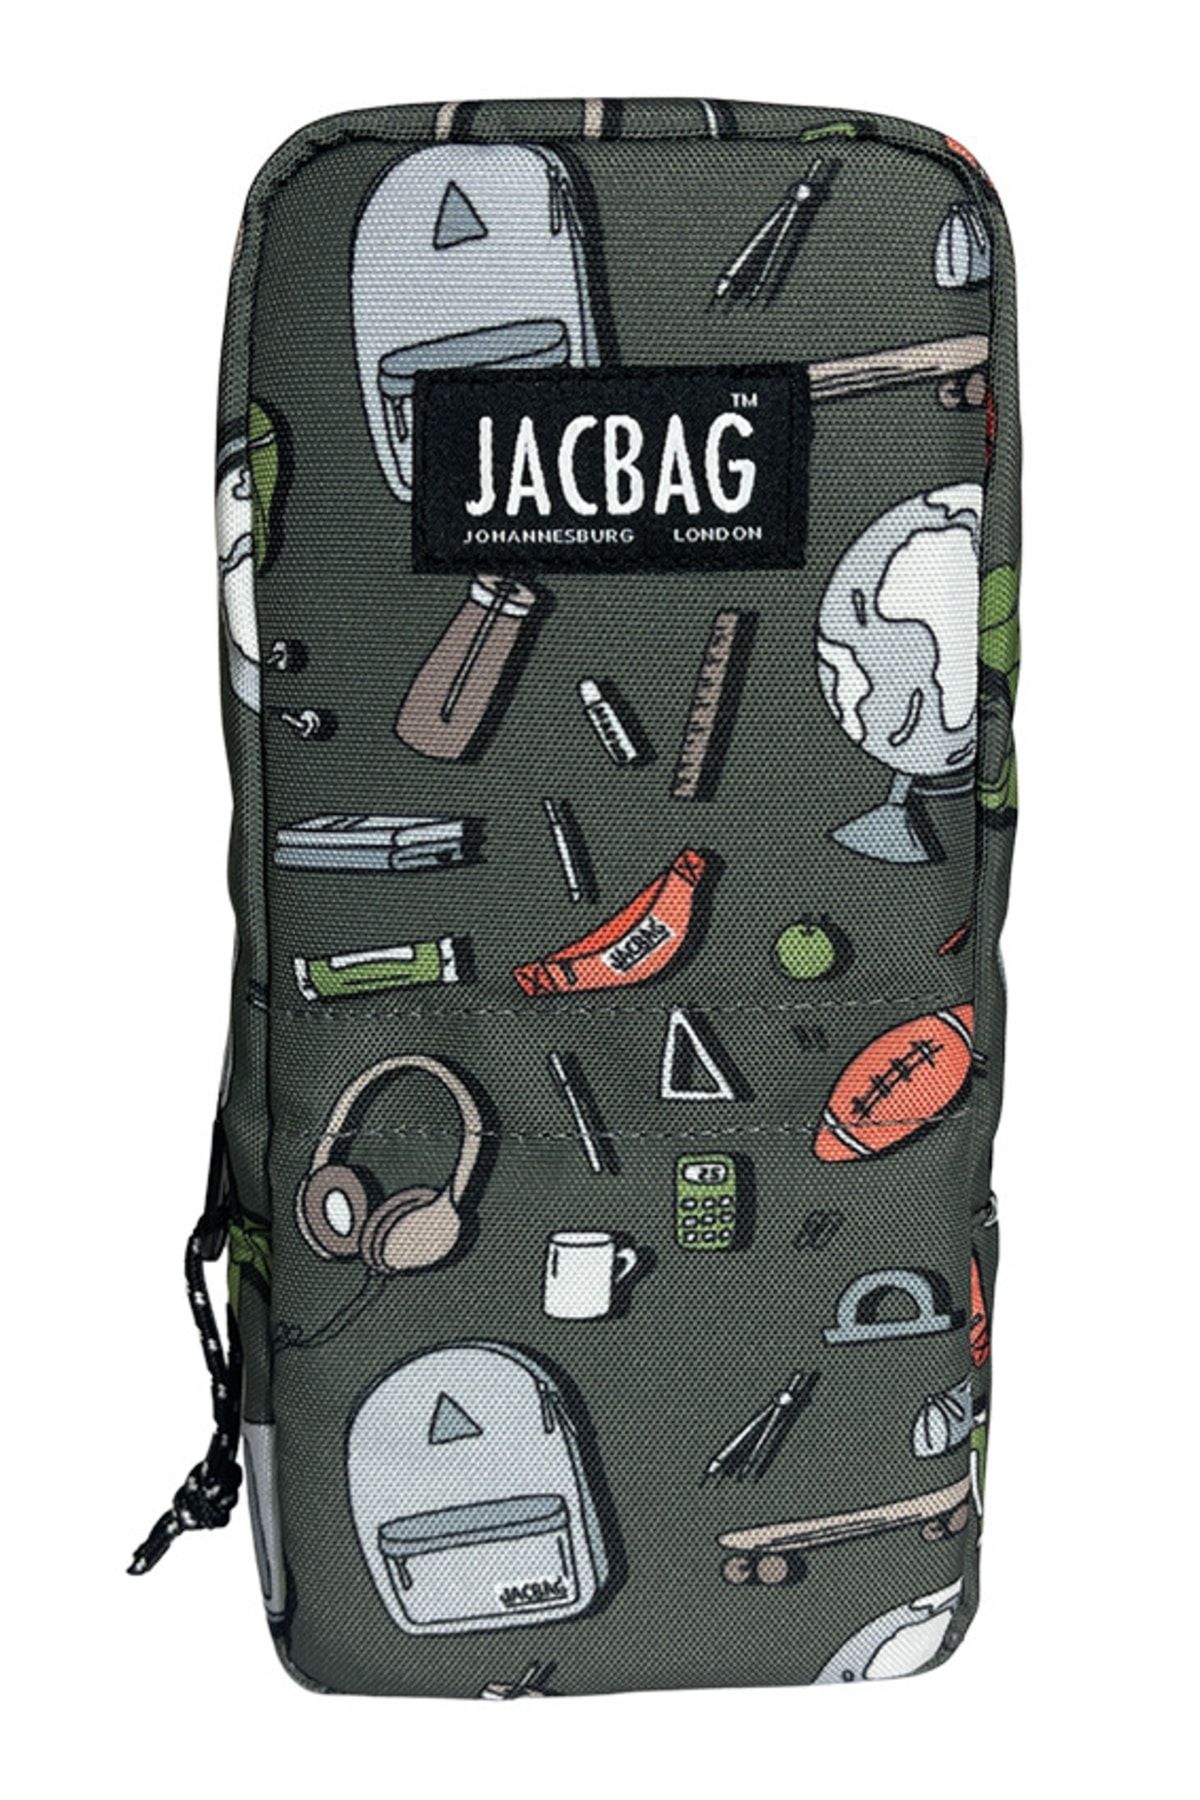 jacbag Stand-pen Case-masa Üstü Kalemlik